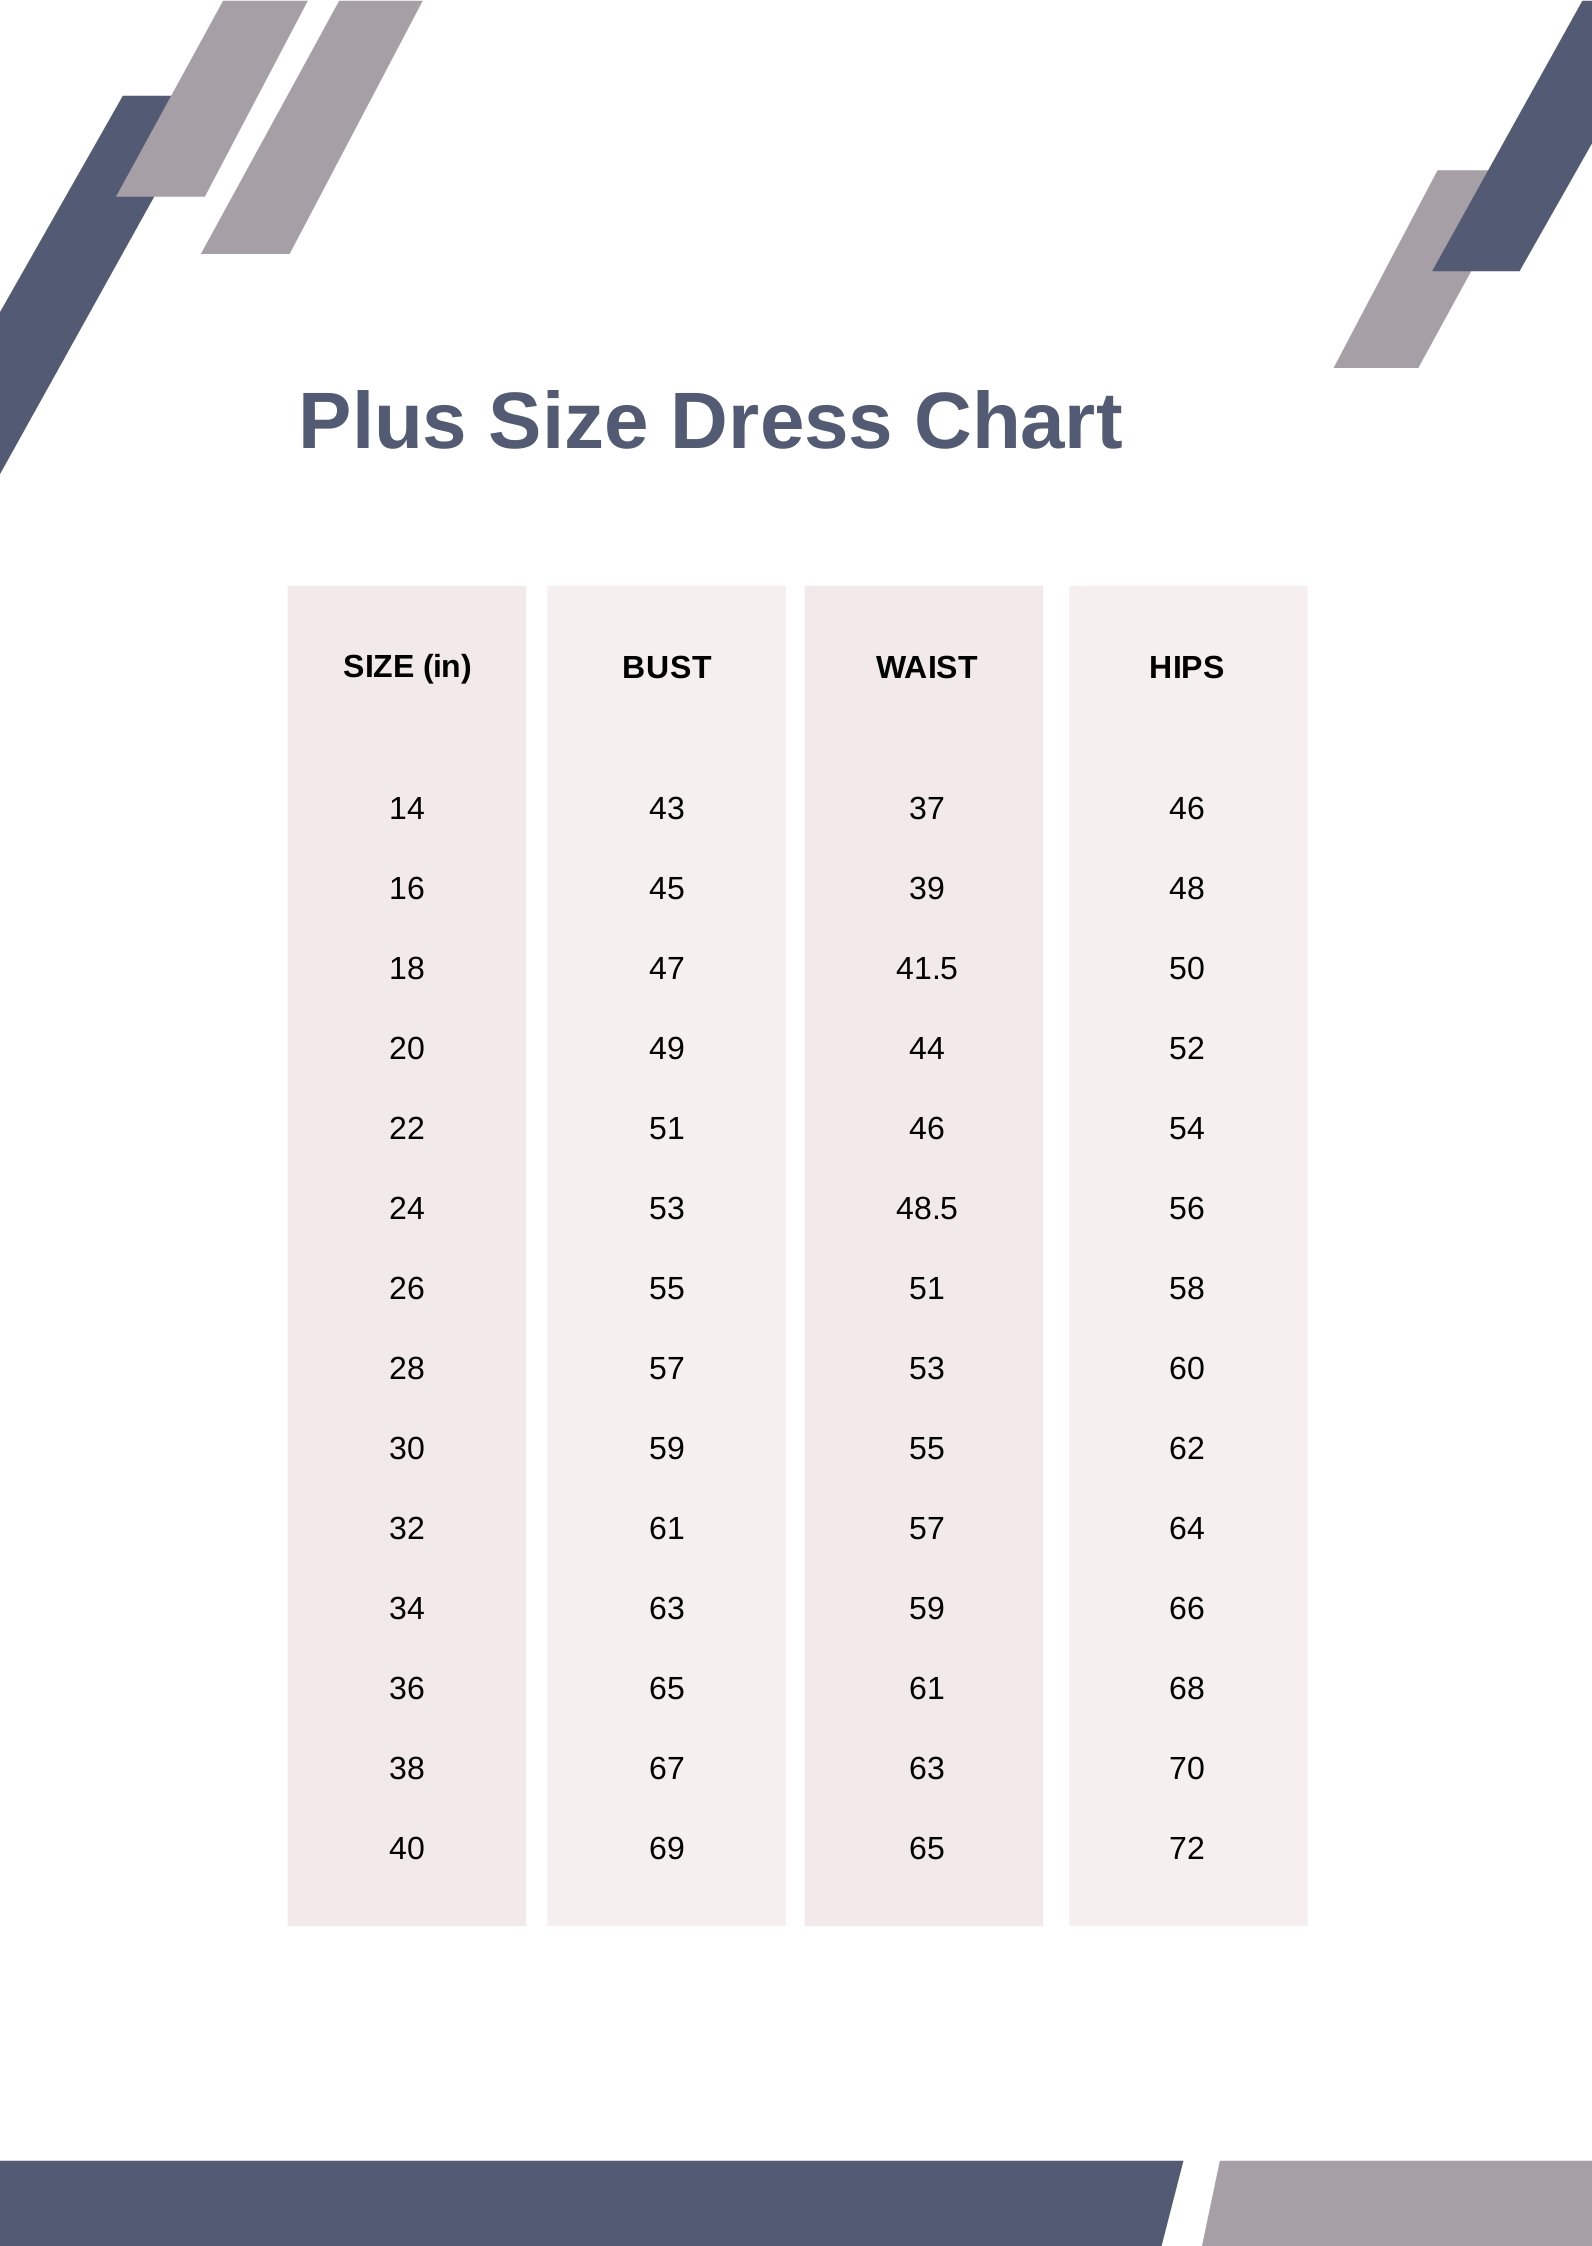 Plus Size Dress Size Chart in PDF